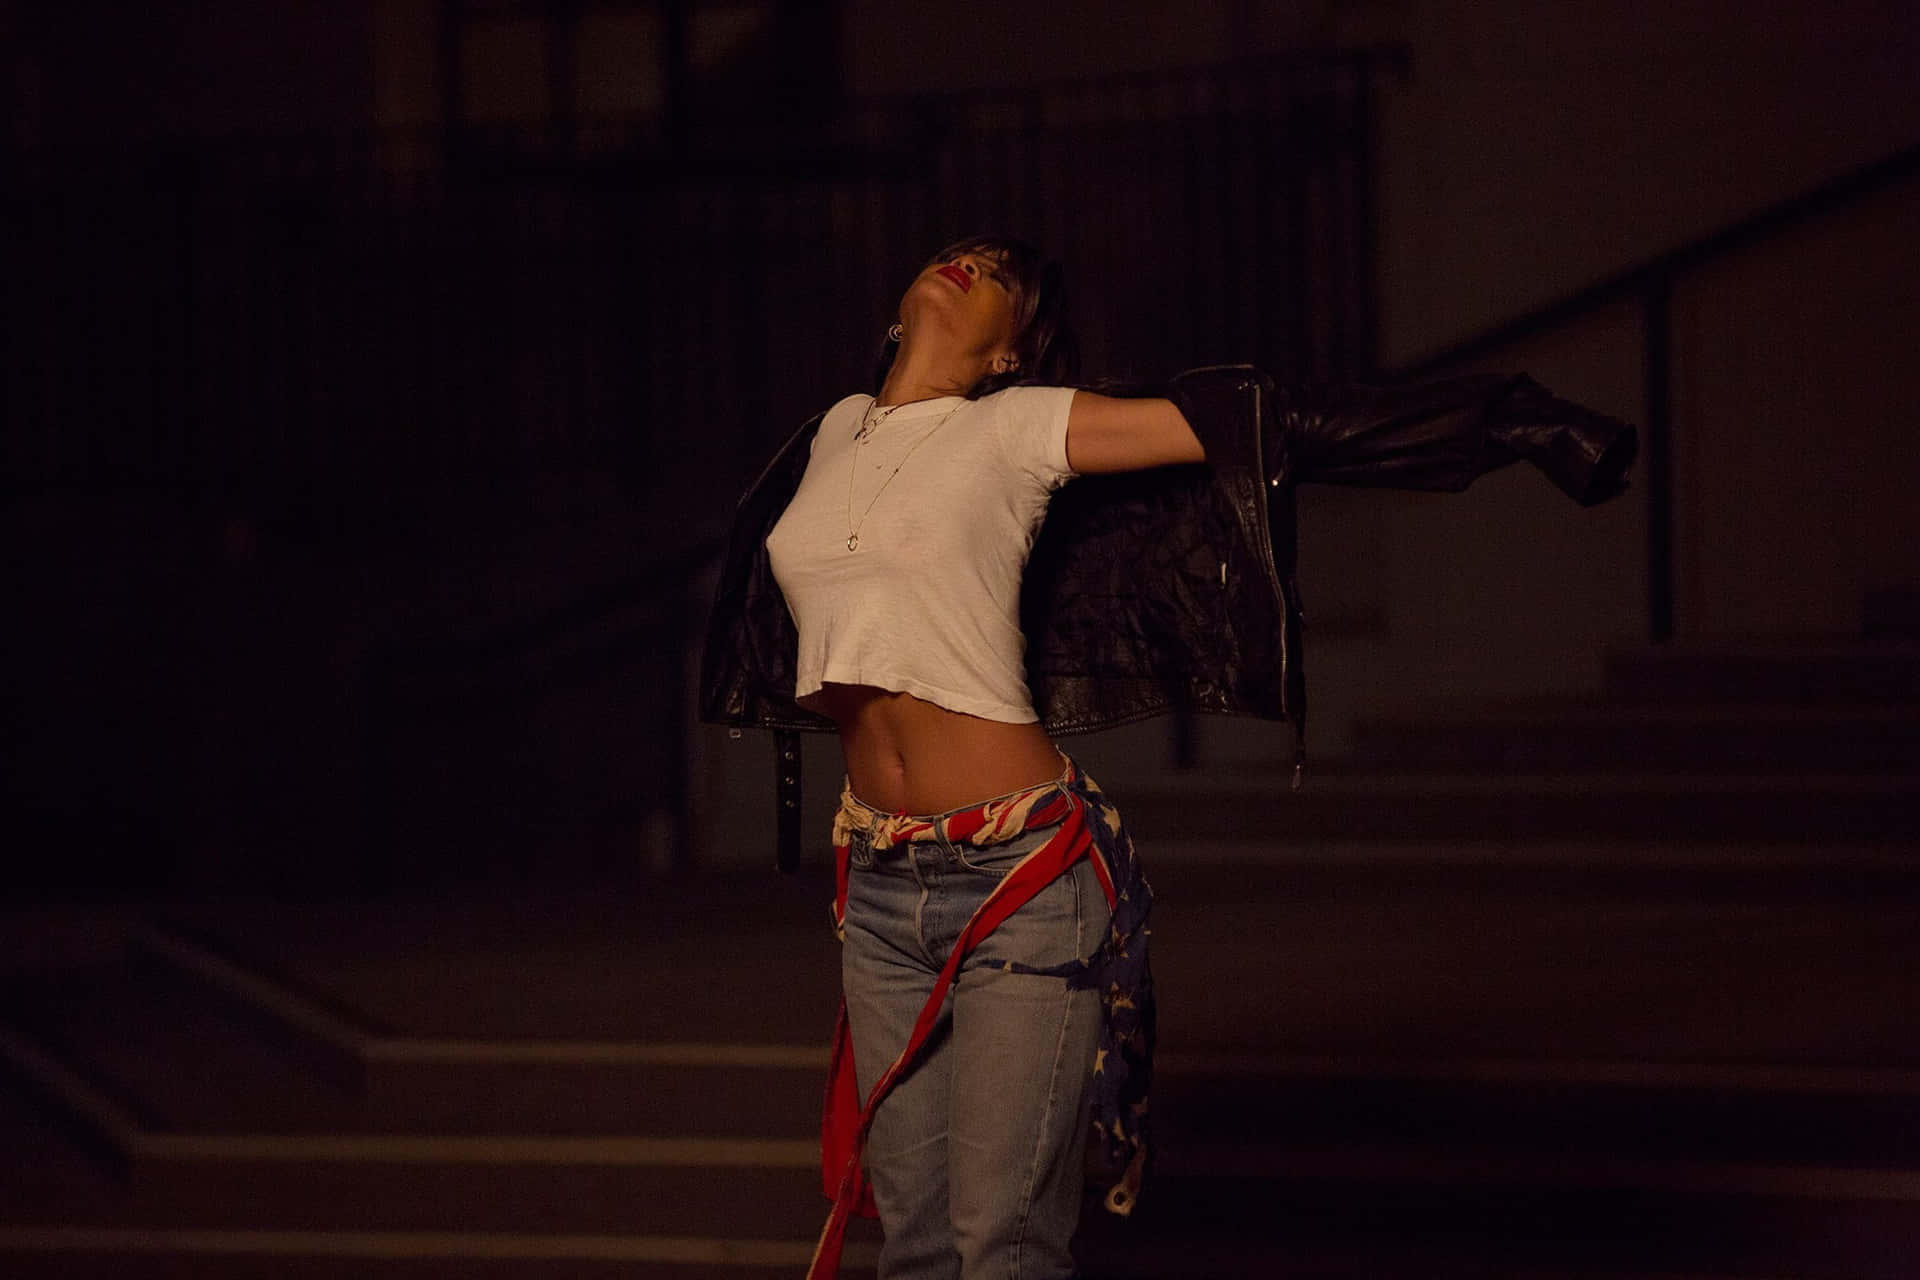 Grammy Award-winning artist Rihanna photographed for the cover of Fenty Magazine